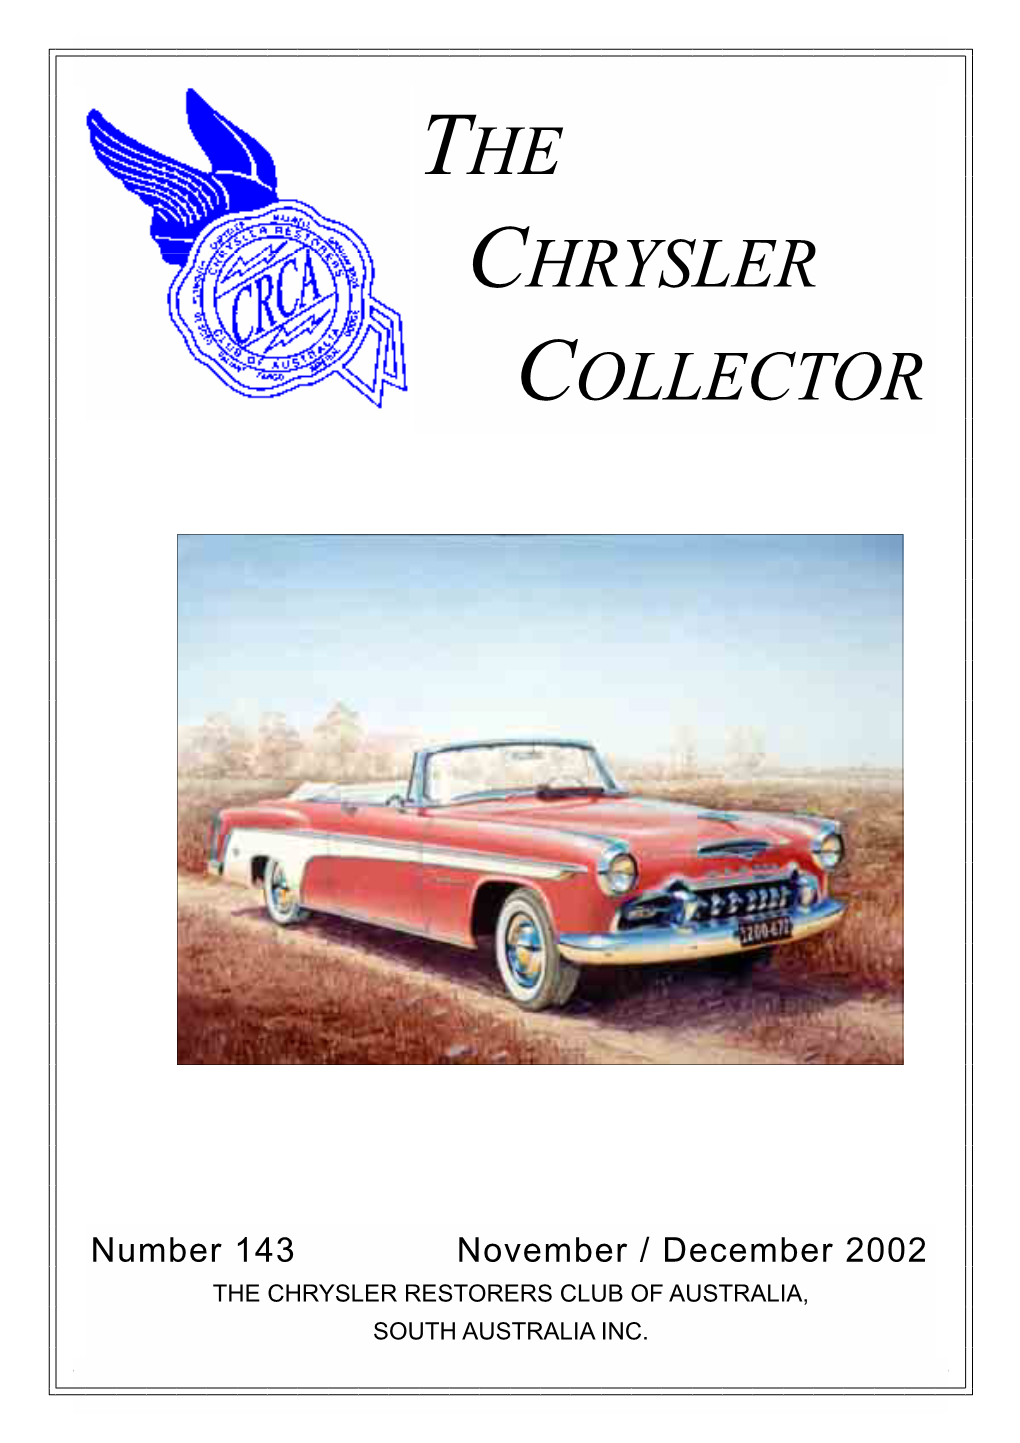 MEMBERS CARS 1930 Chrysler 77